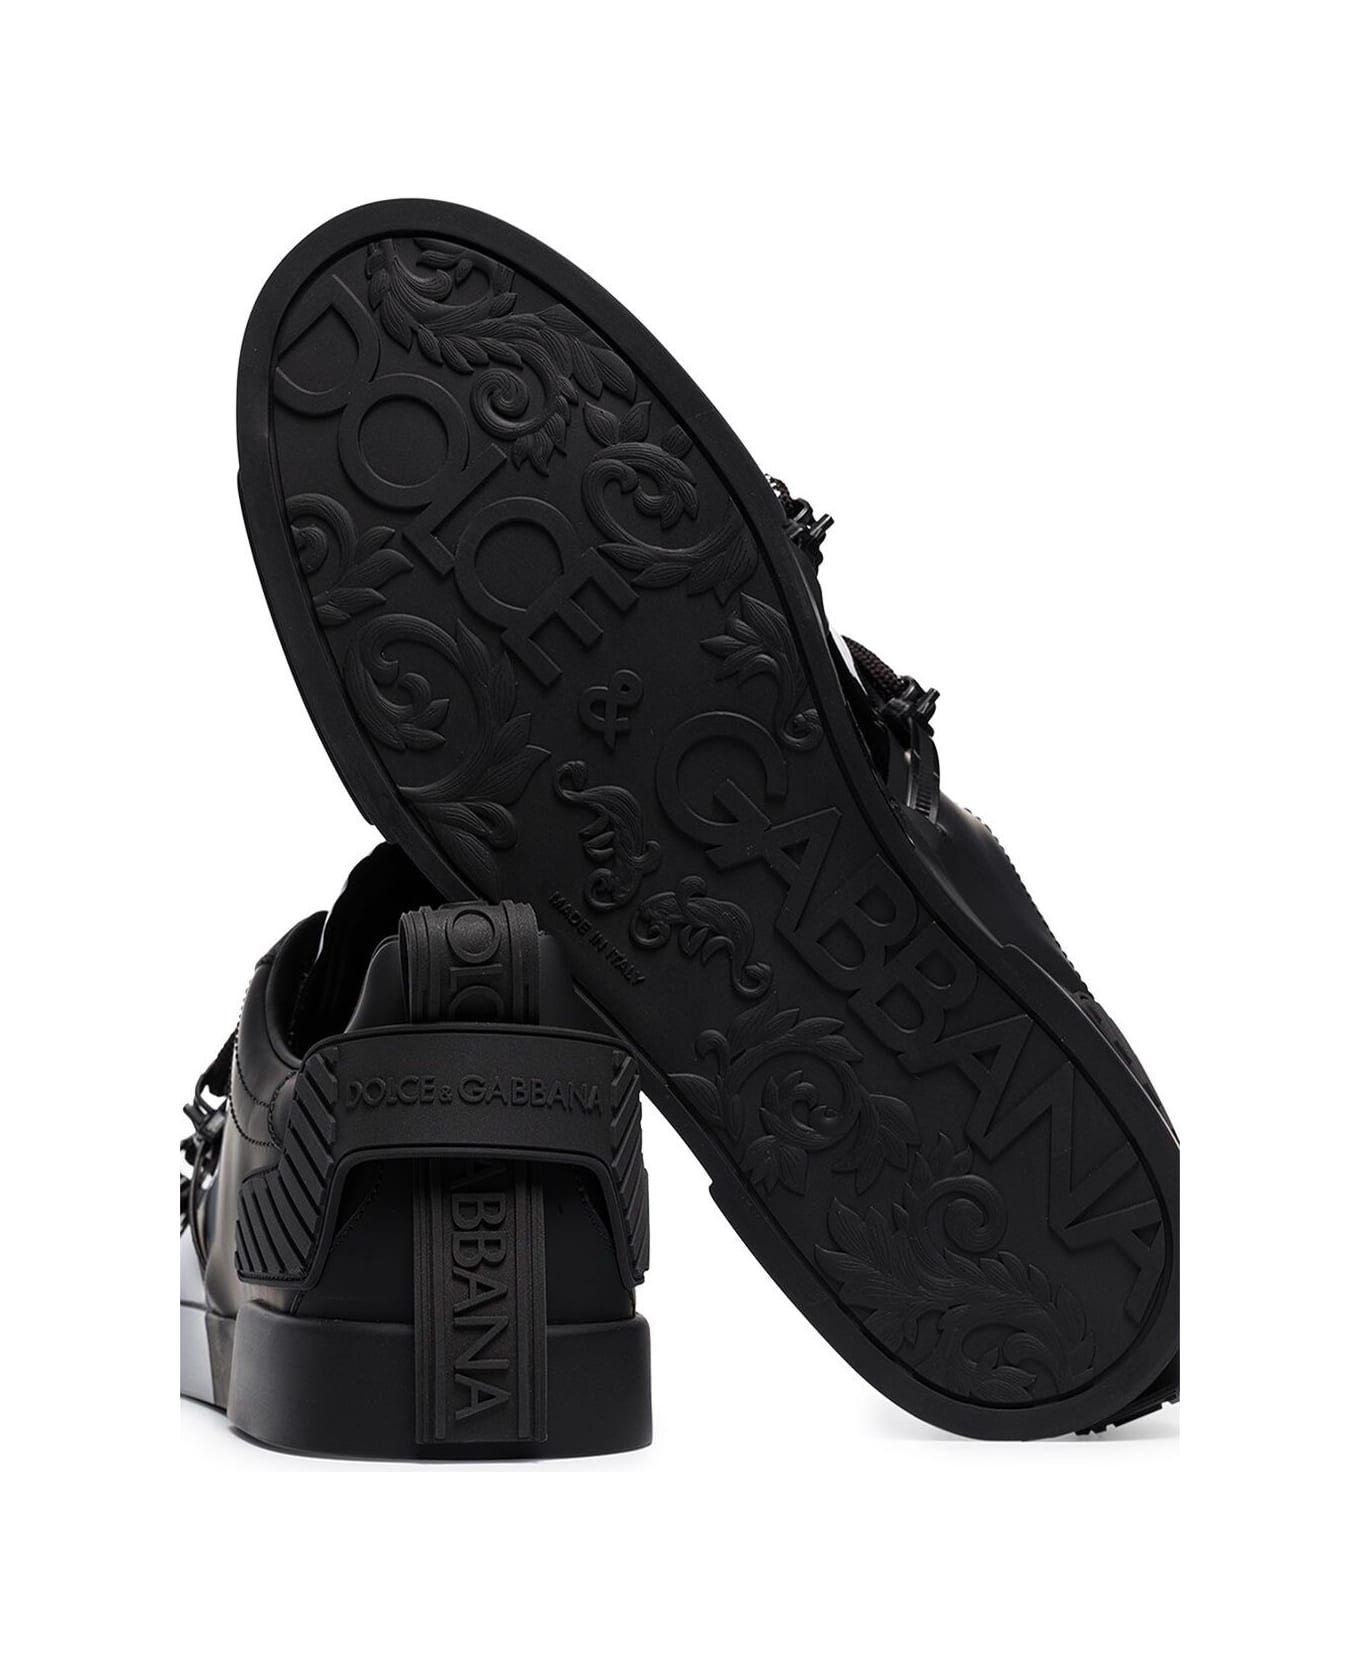 Dolce & Gabbana Man's Portofino Black Leather Sneakers - Black スニーカー